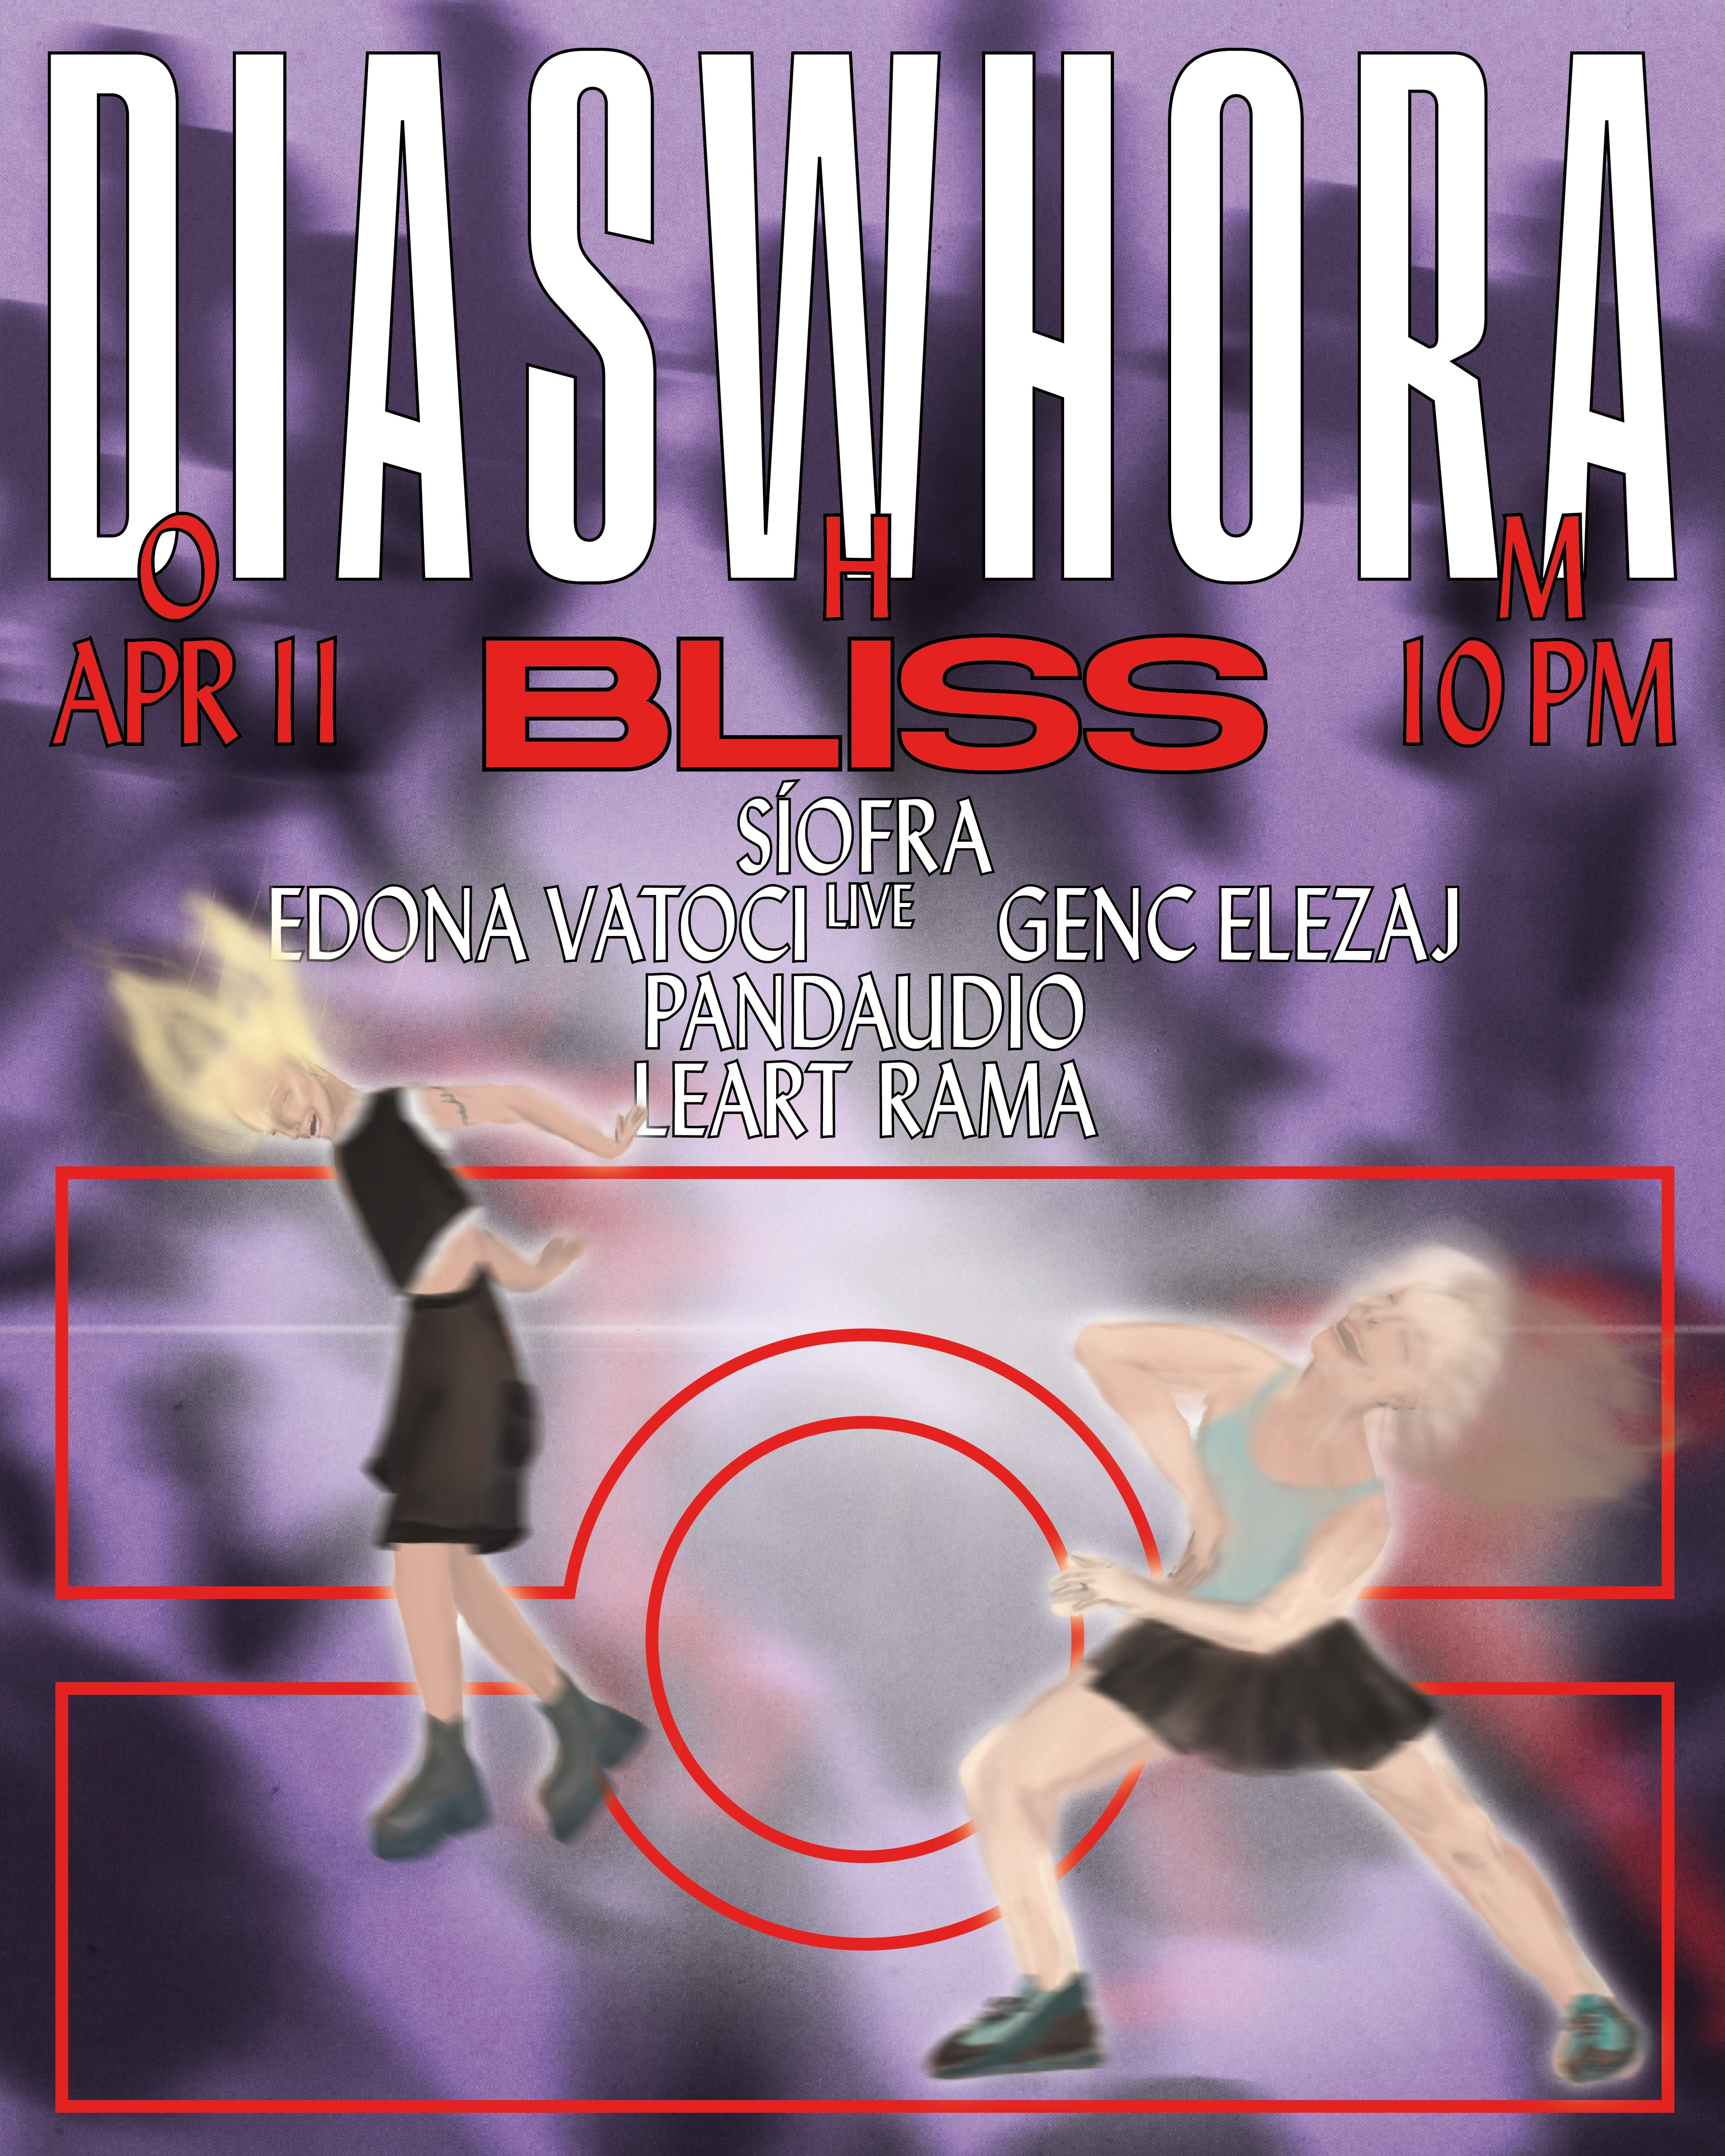 Diaswhora x Bliss - Página frontal